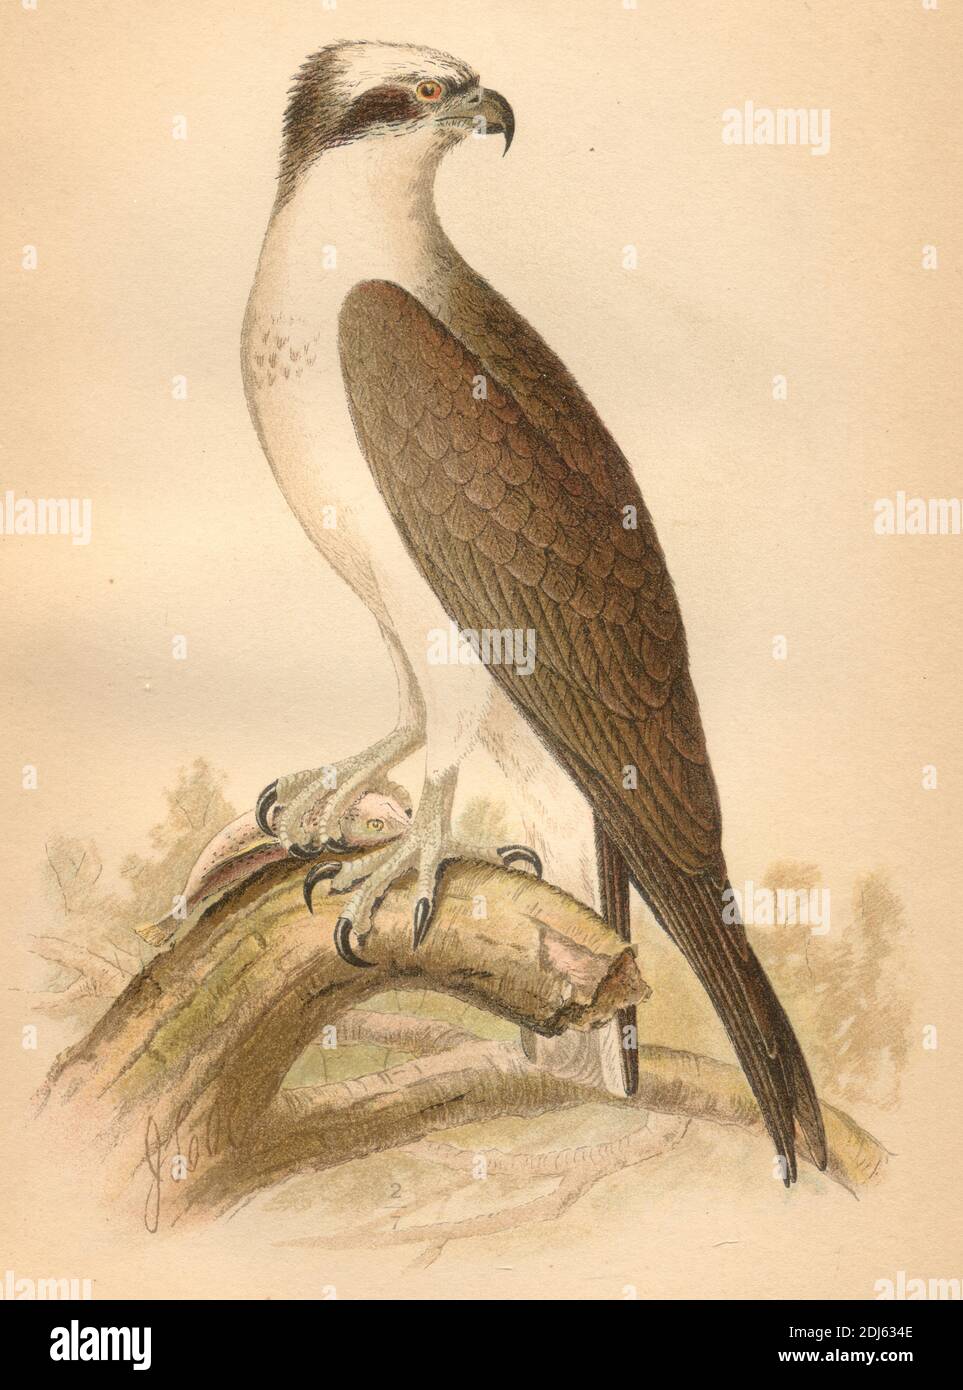 Osprey audubon birds of america hi-res stock photography and images - Alamy